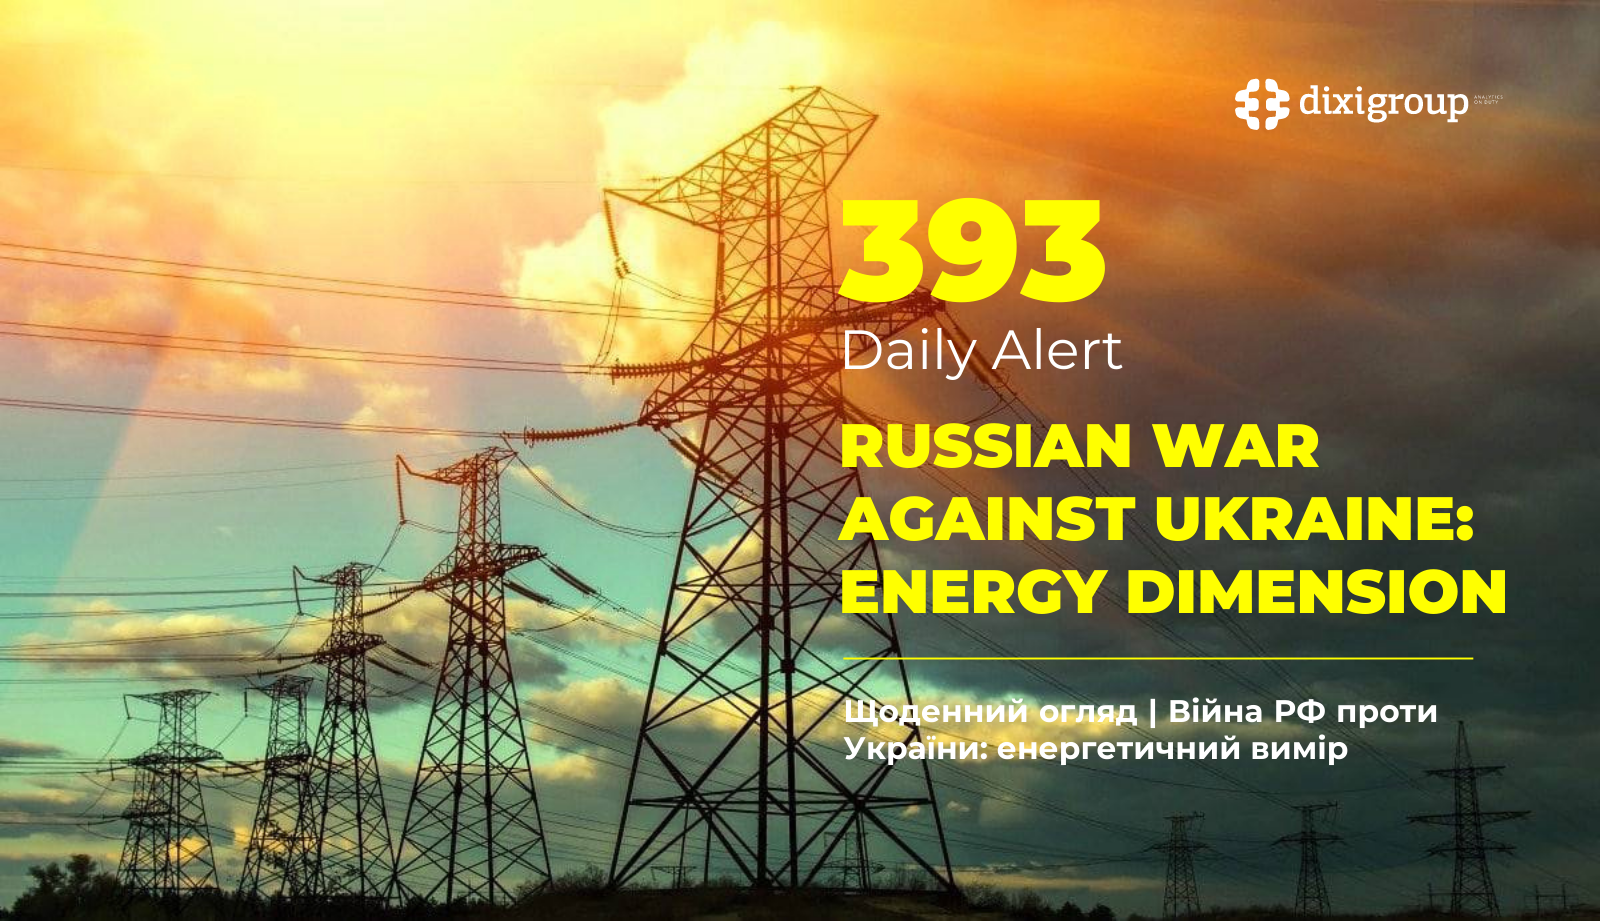 Russian War Against Ukraine: Energy Dimension (DiXi Group alert) – March 23